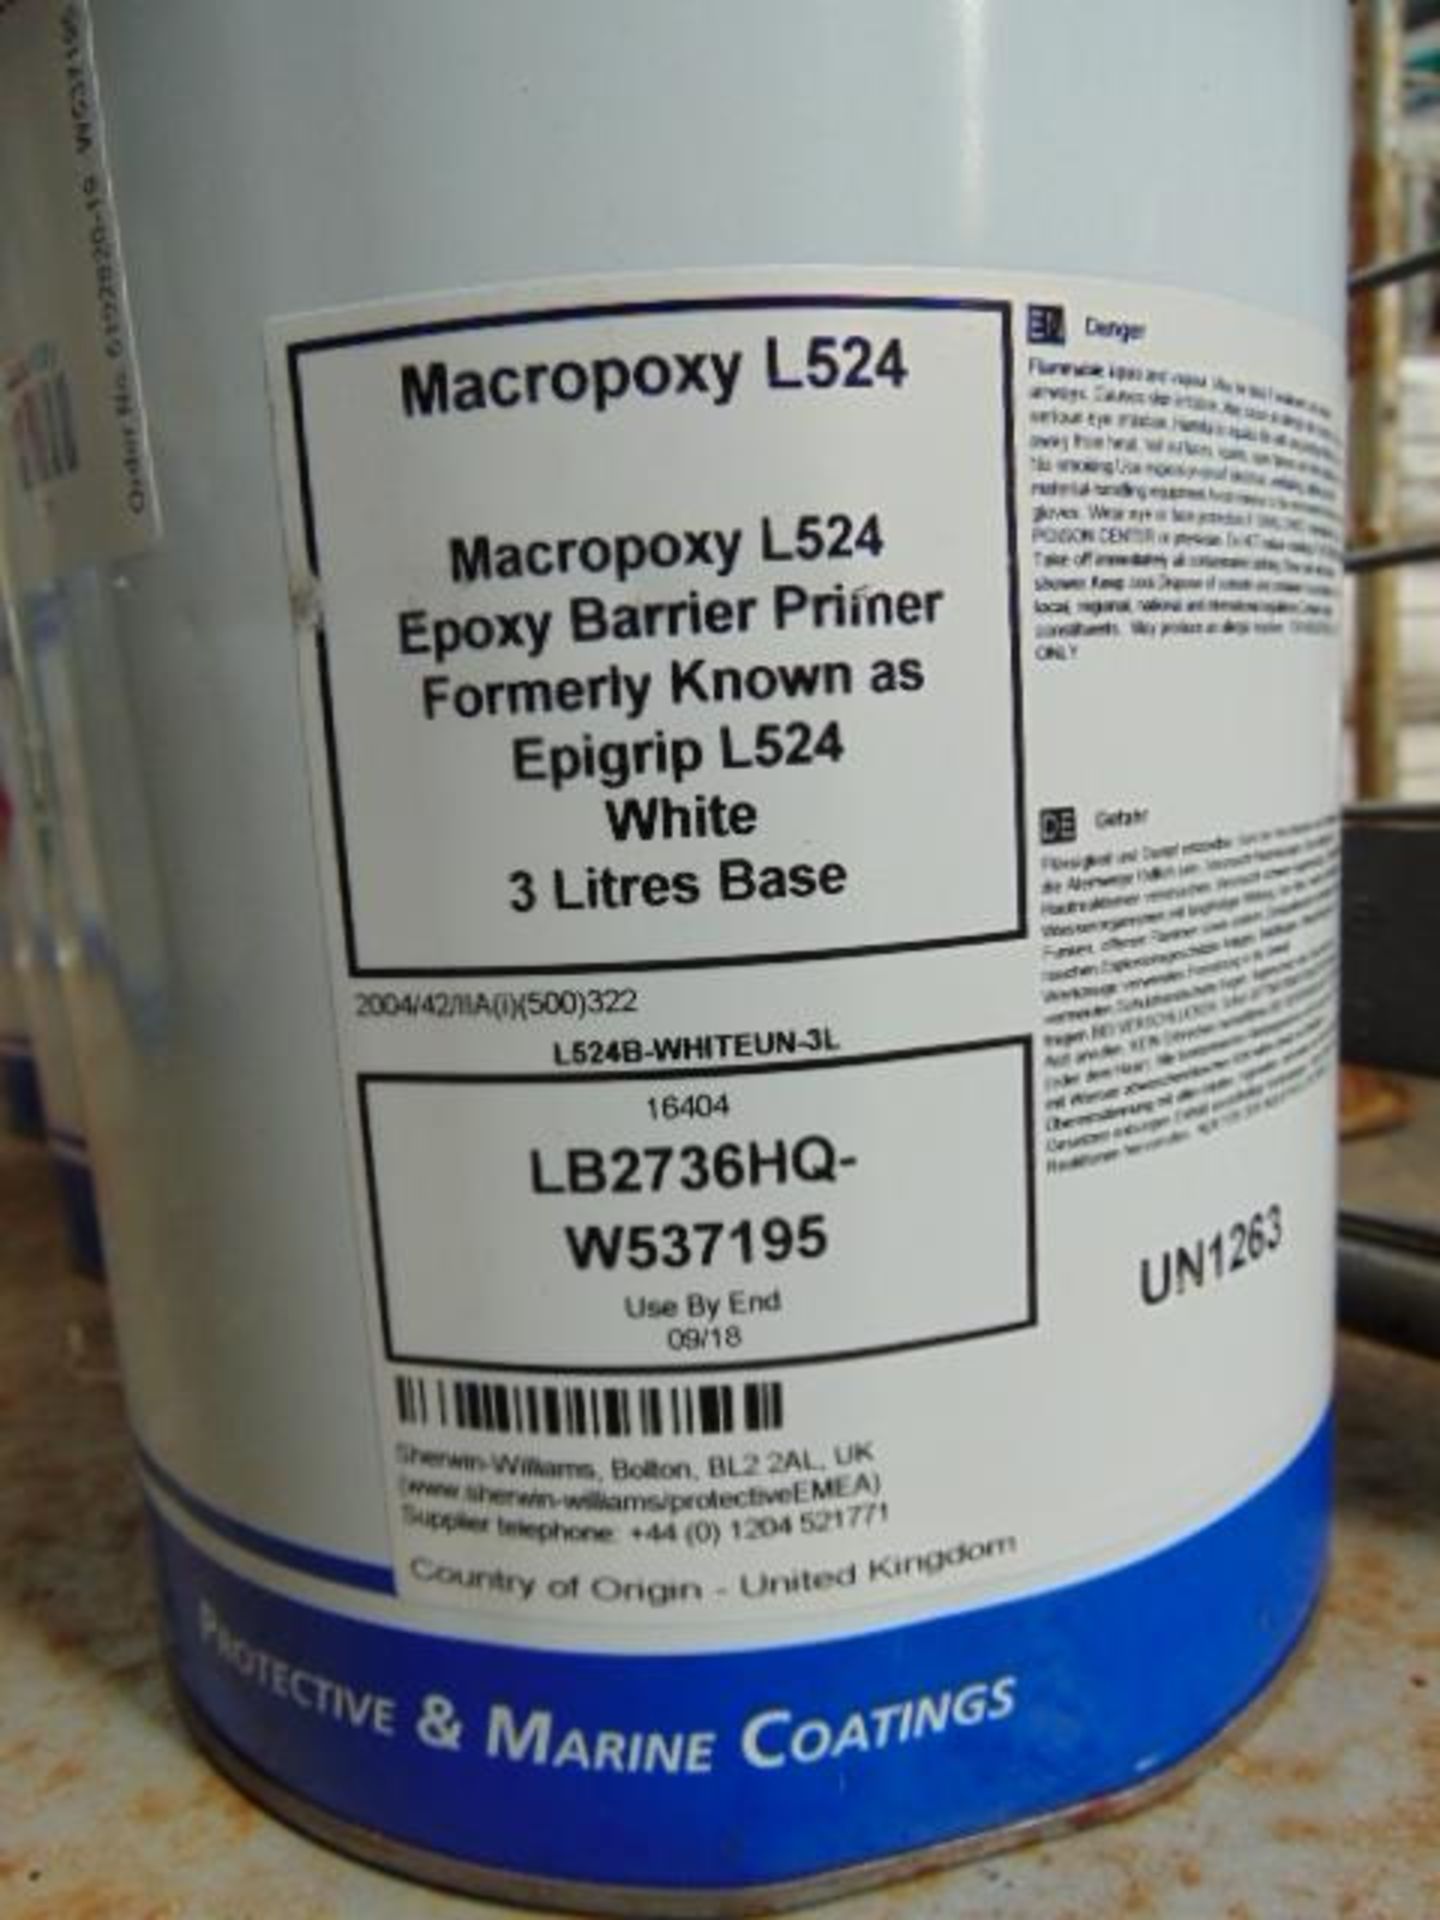 3 x Macropoxy L524 2-Part Barrier Primer - Image 2 of 3